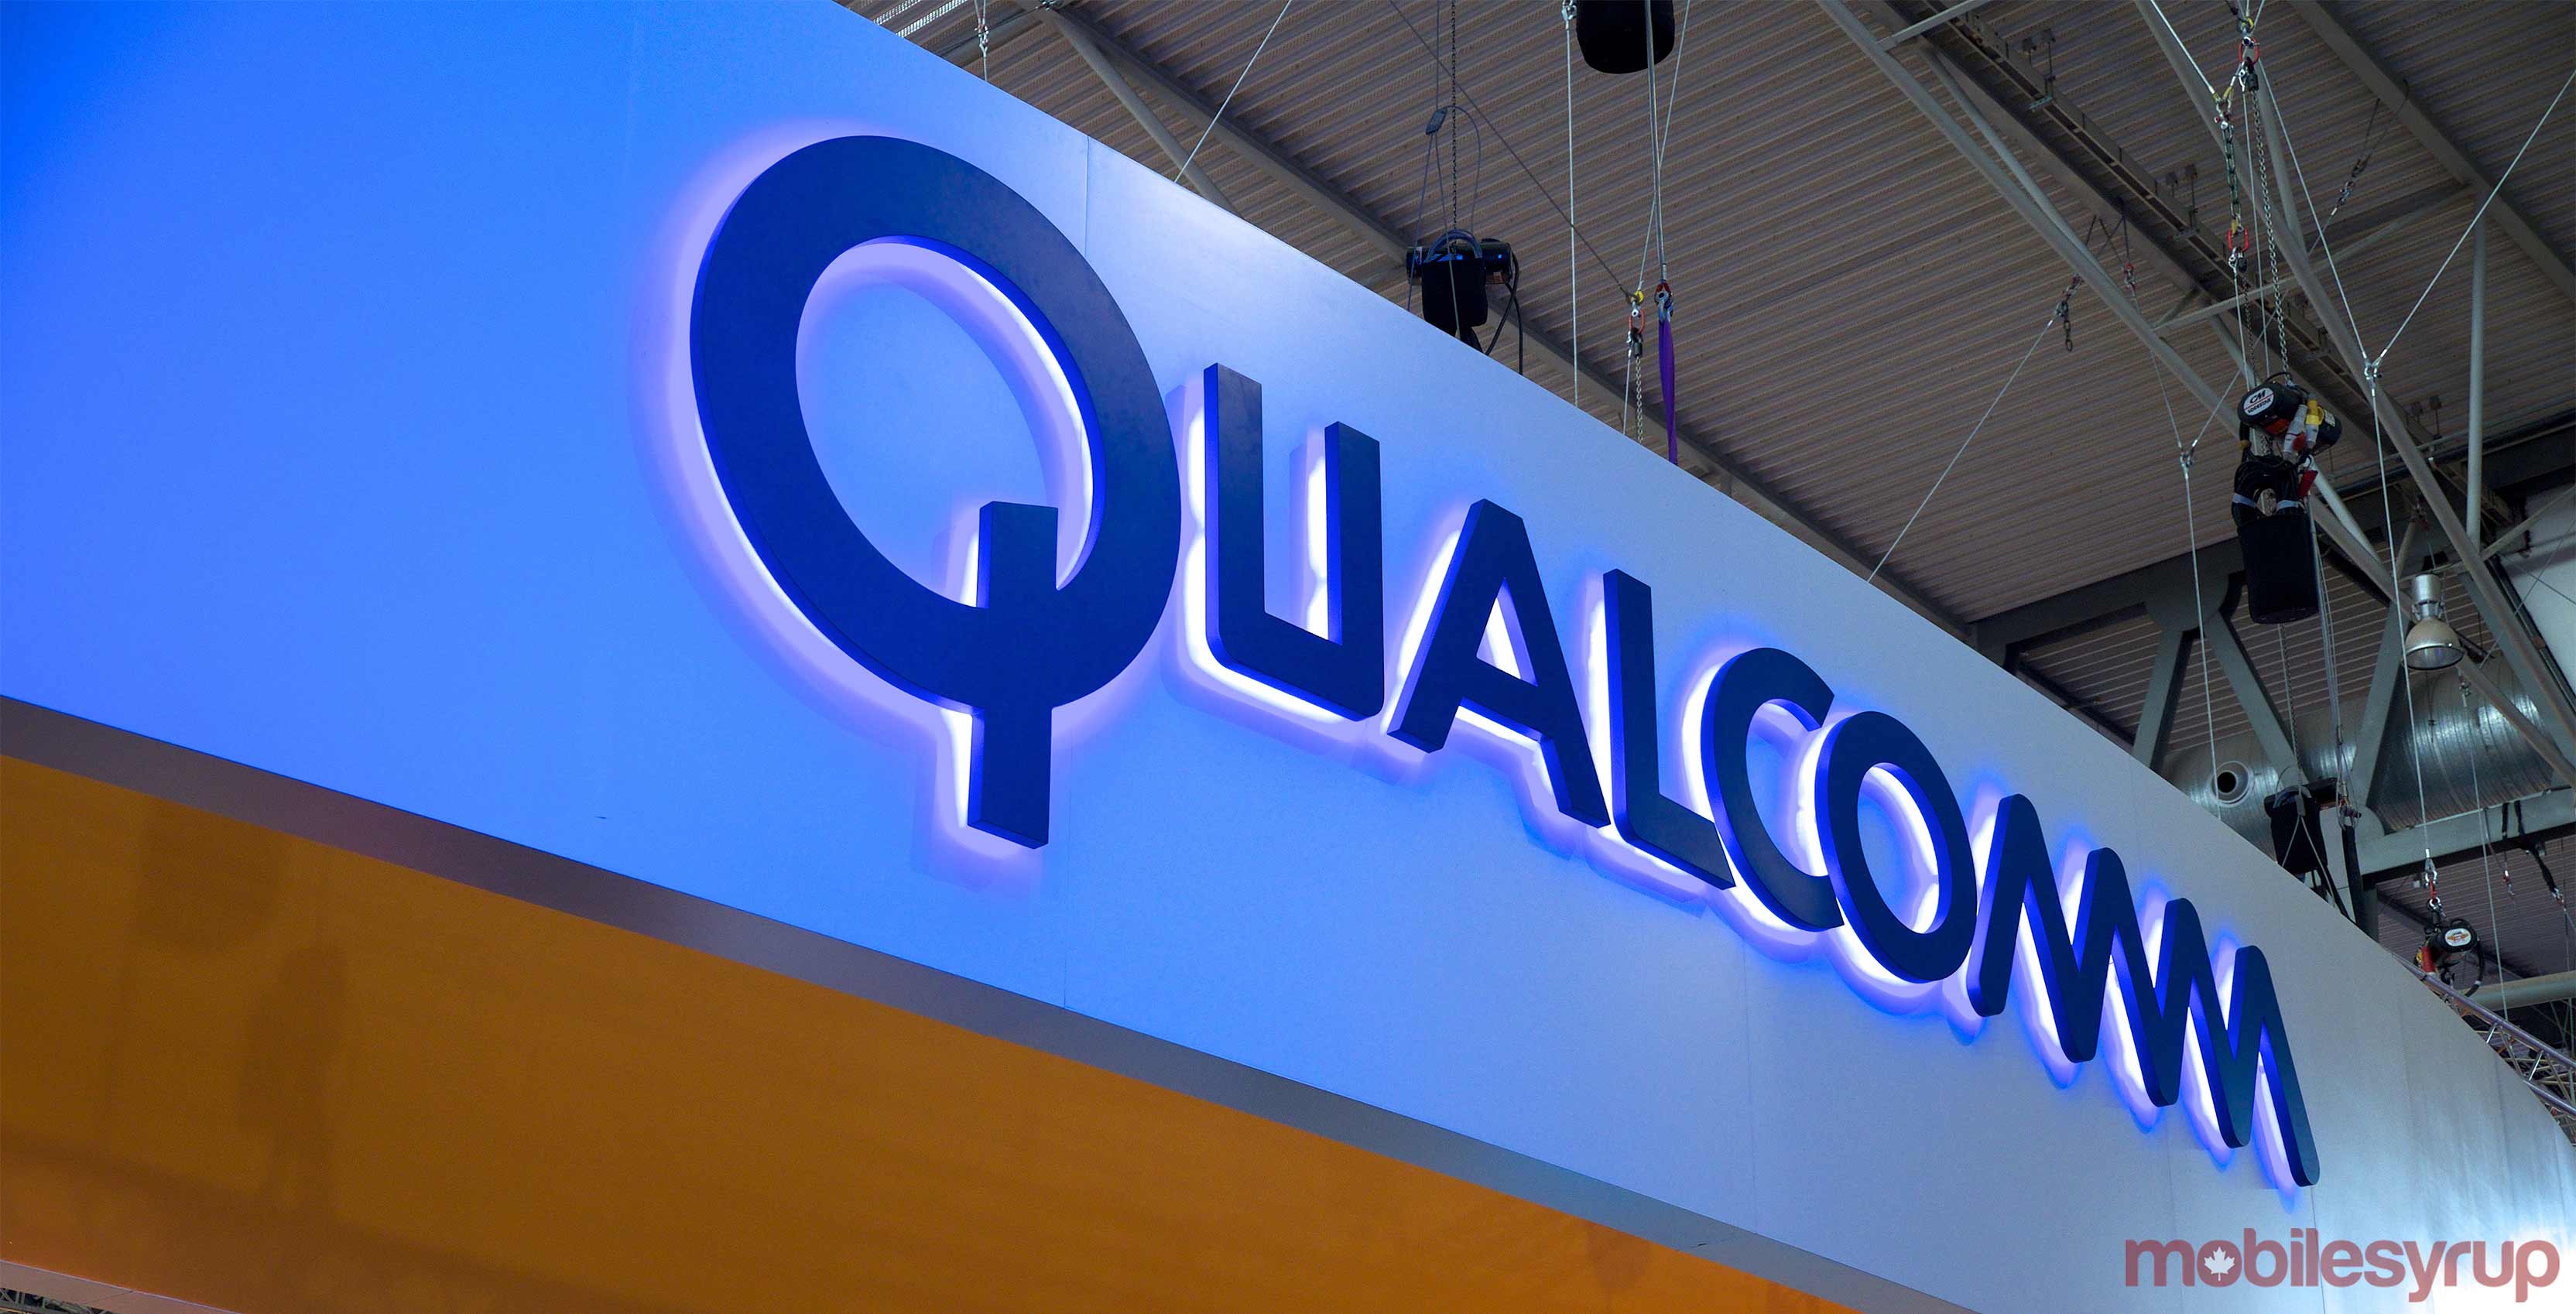 An image showcasing the Qualcomm logo